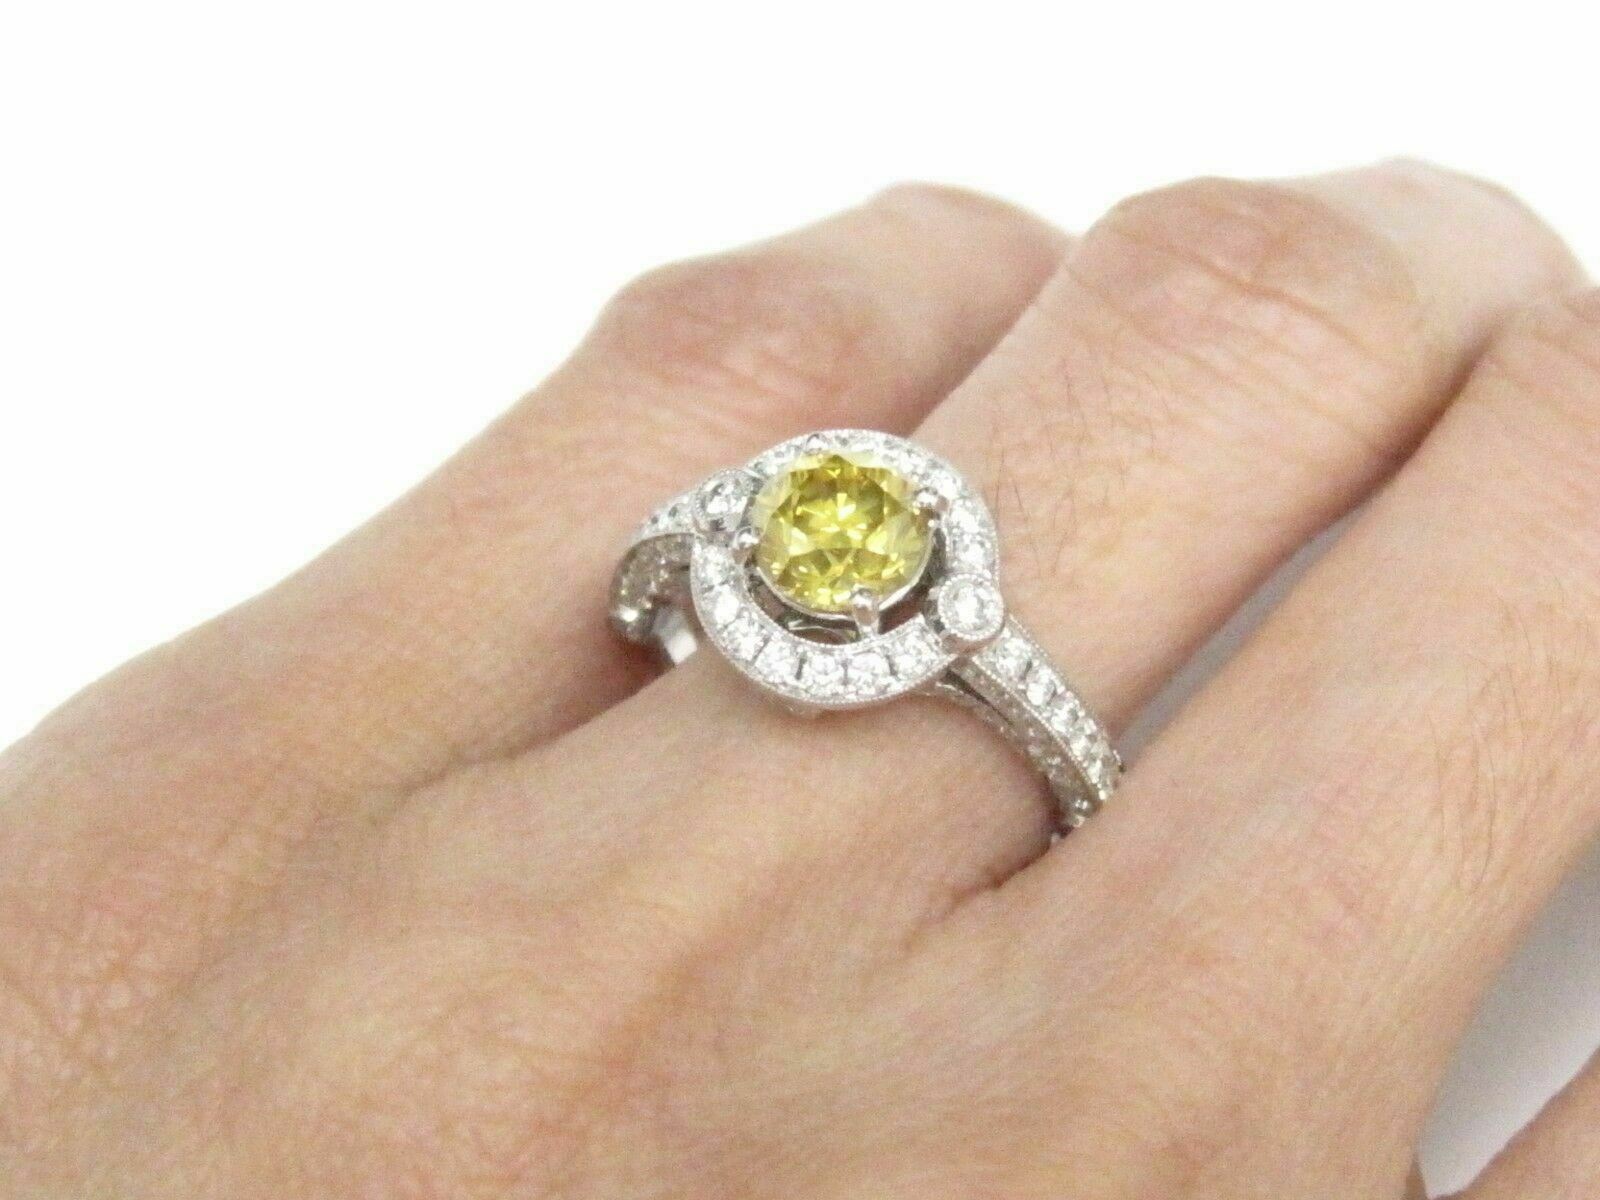 3.22 TCW Art Deco Fancy Yellow Diamond Solitaire Ring Size 6.75 18k White Gold